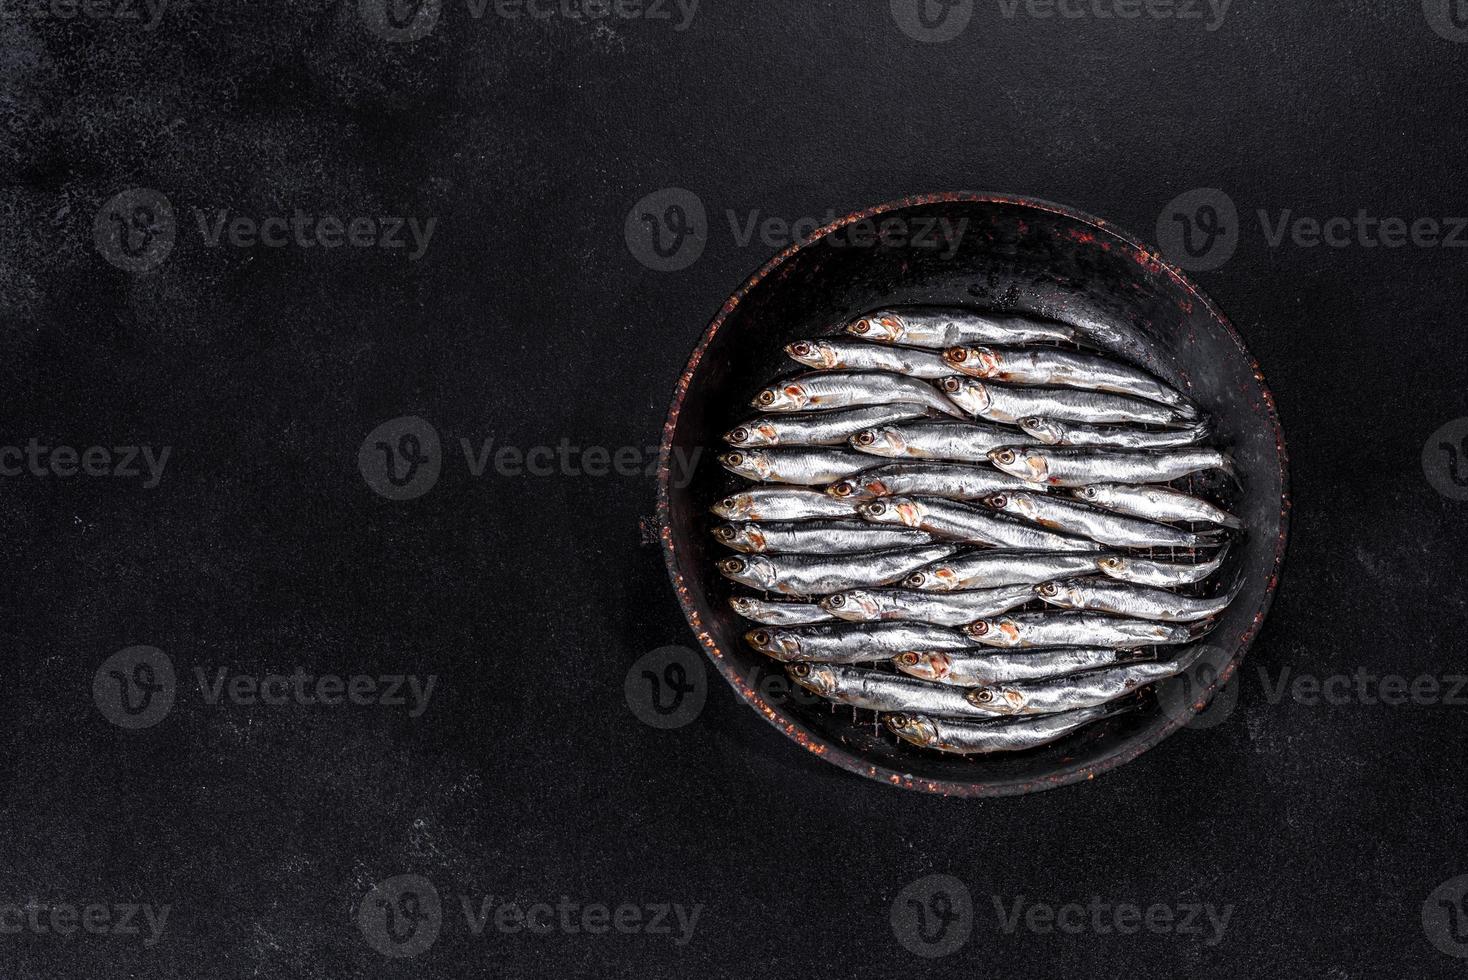 verschillende vis gezouten ansjovis op een donkere betonnen tafel foto